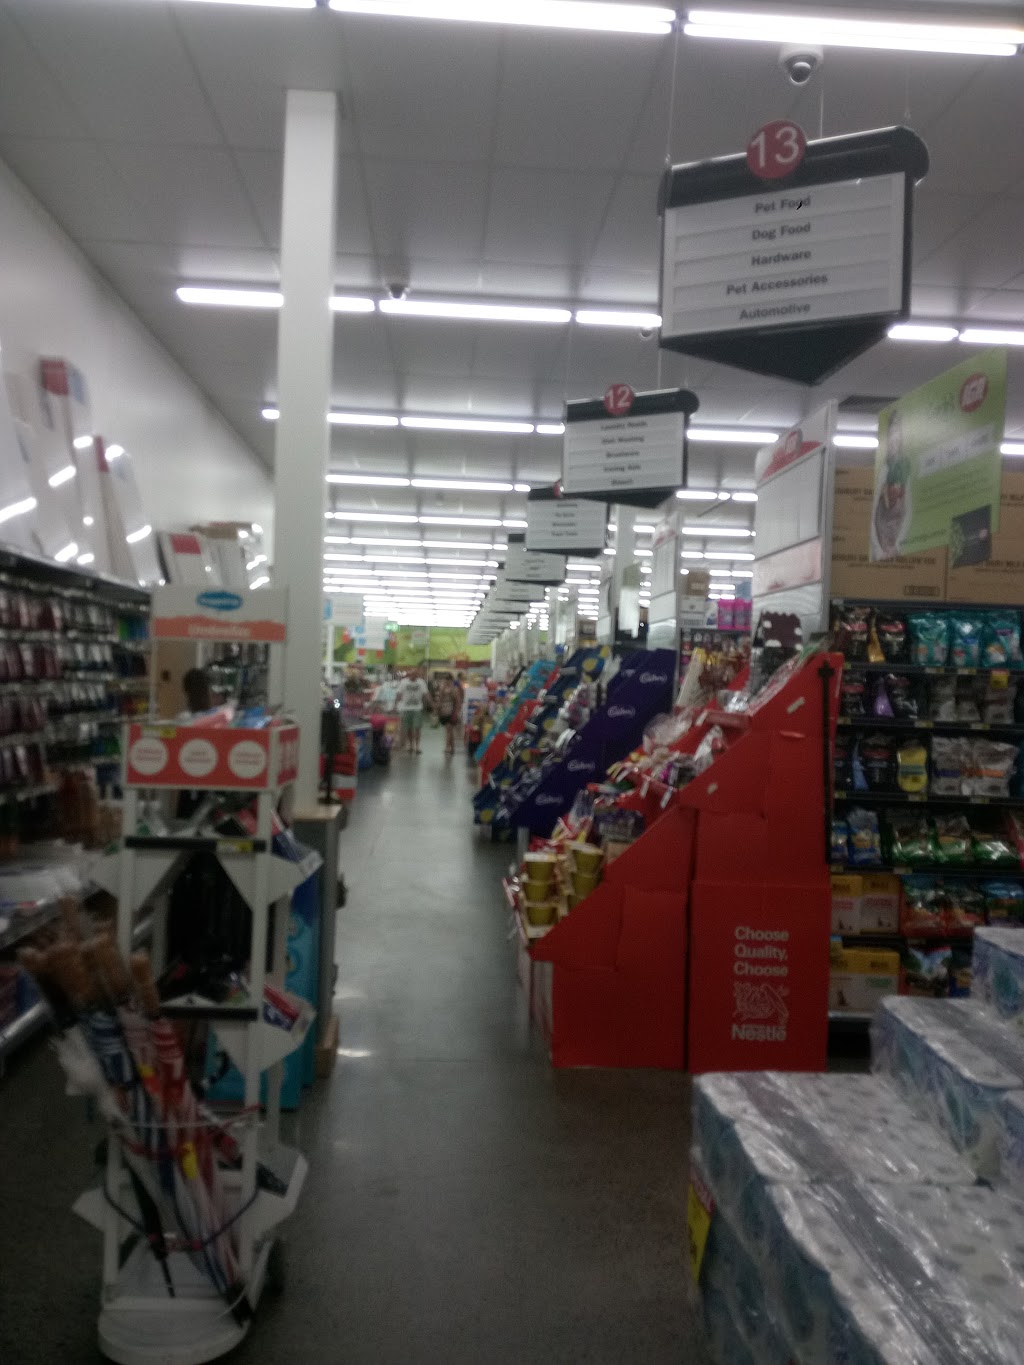 Carlos Supa IGA | supermarket | 17-27 Main Western Rd, Tamborine Mountain QLD 4272, Australia | 0755450950 OR +61 7 5545 0950